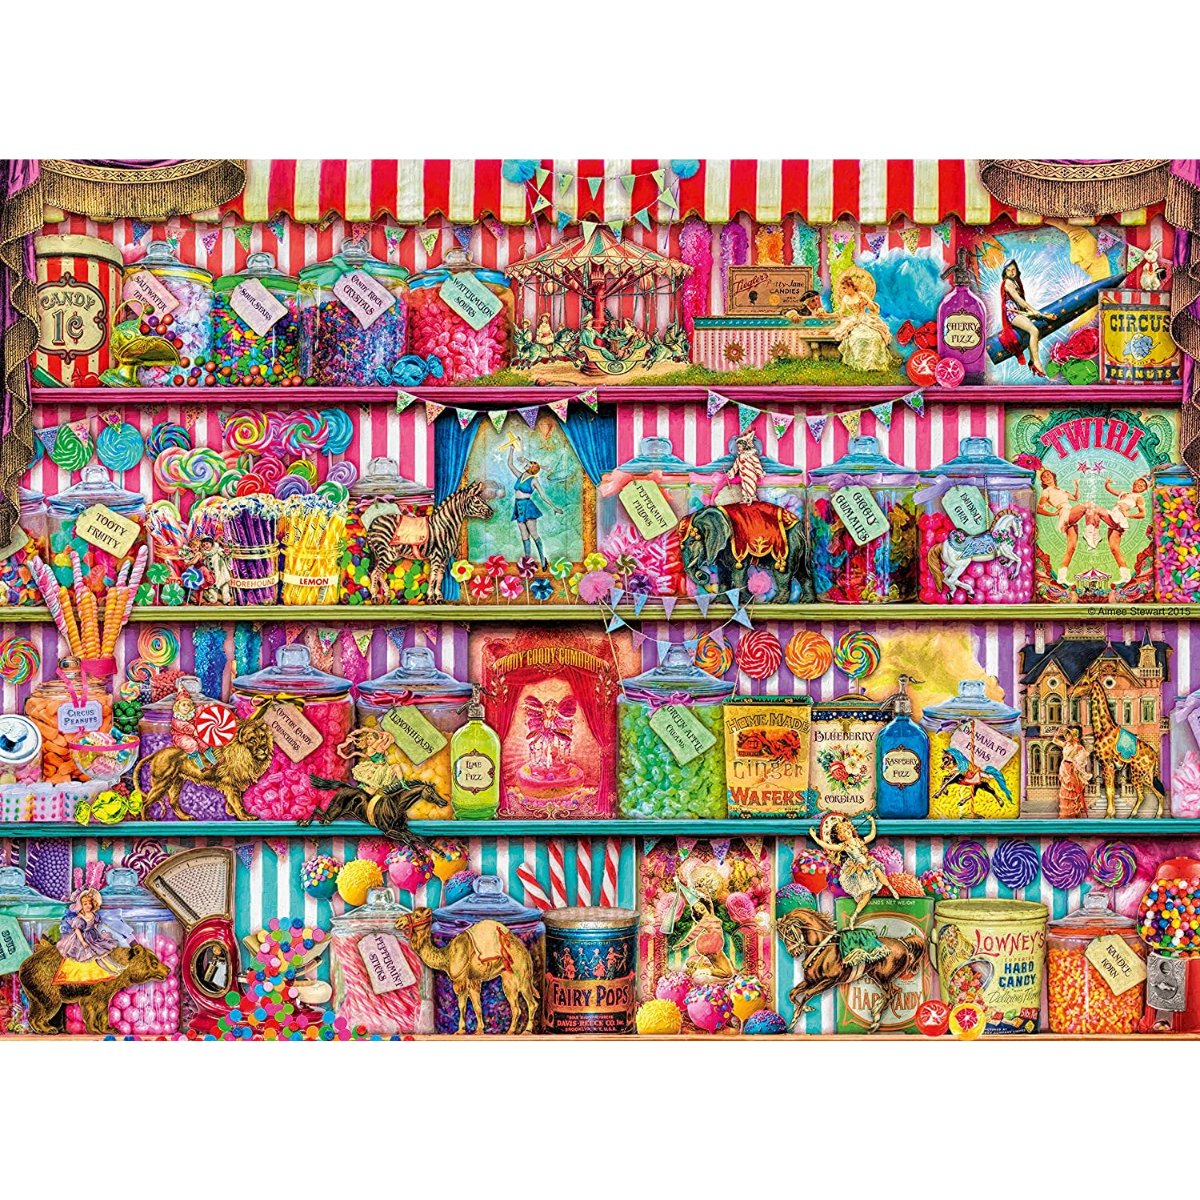 Ravensburger The Sweet Shop Jigsaw Puzzle (500 Pieces) - Phillips Hobbies